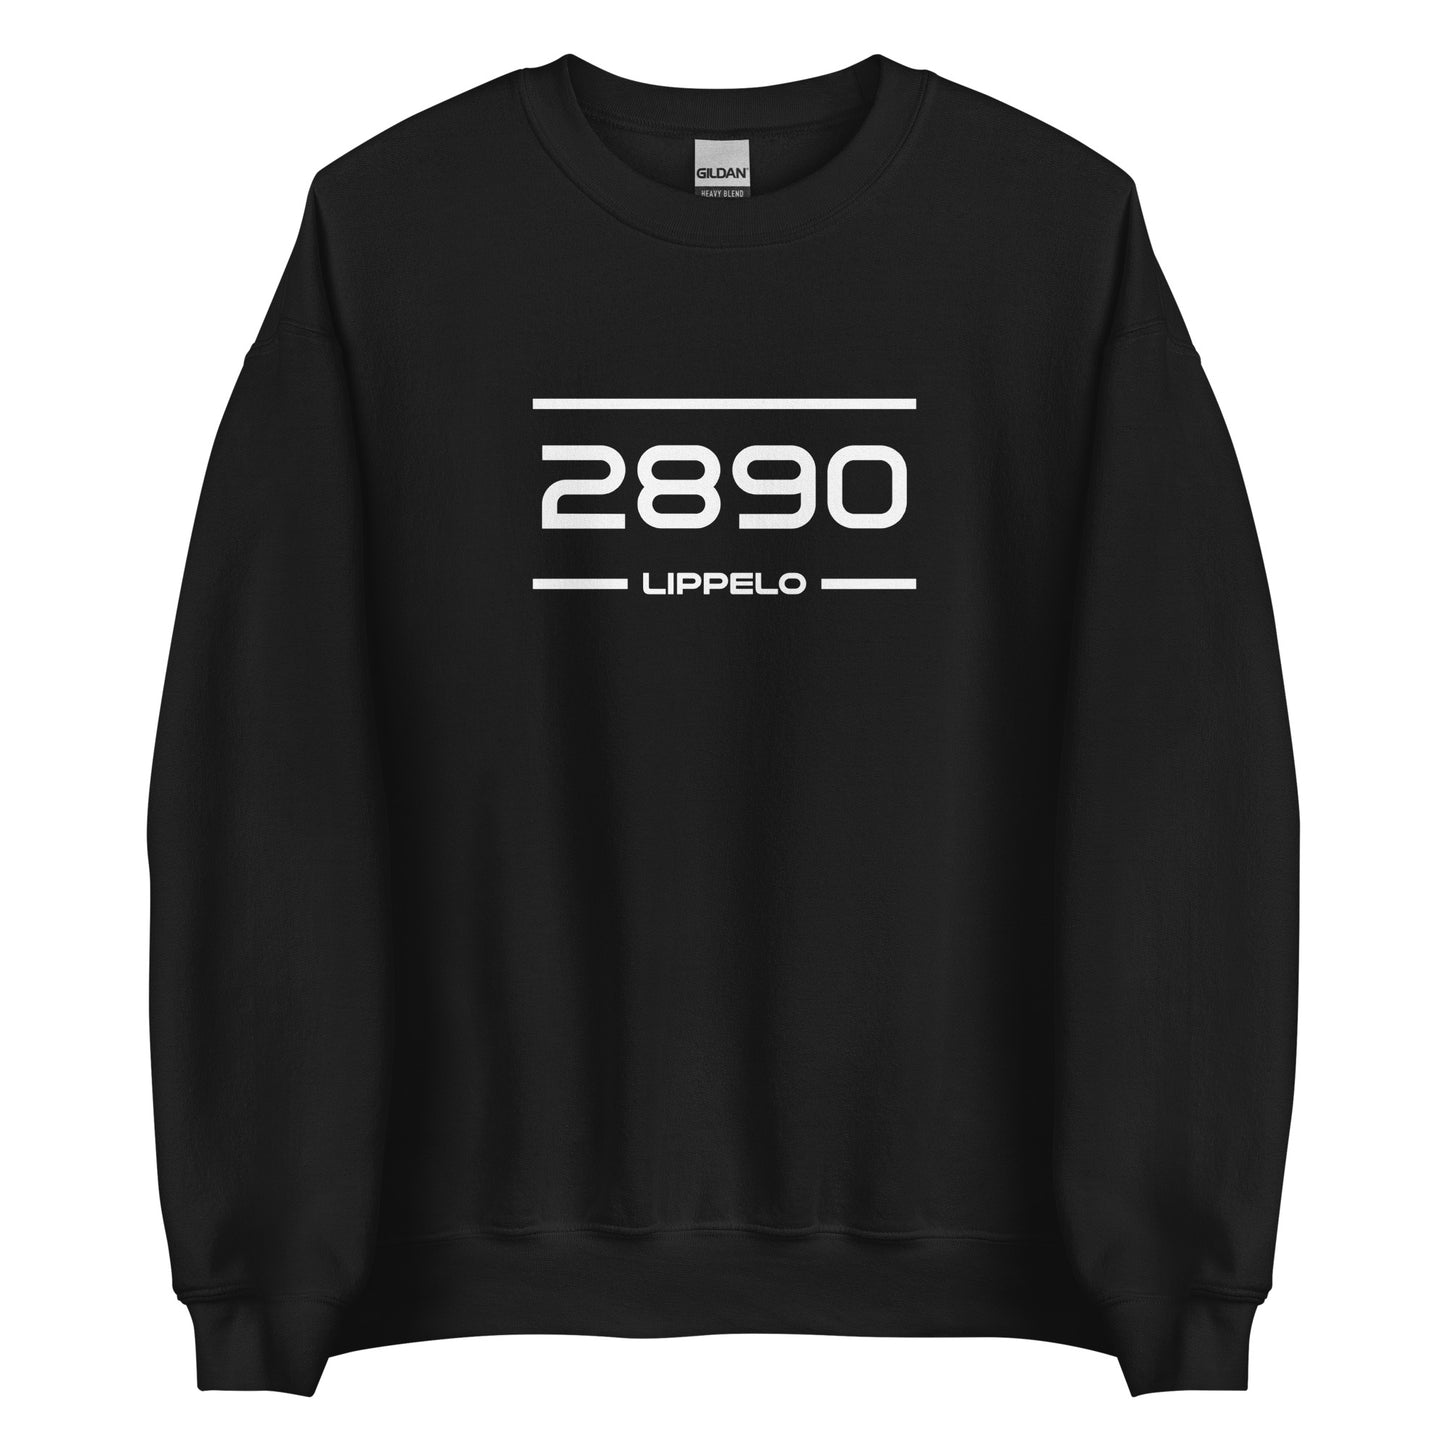 Sweater - 2890 - Lippelo (M/V)